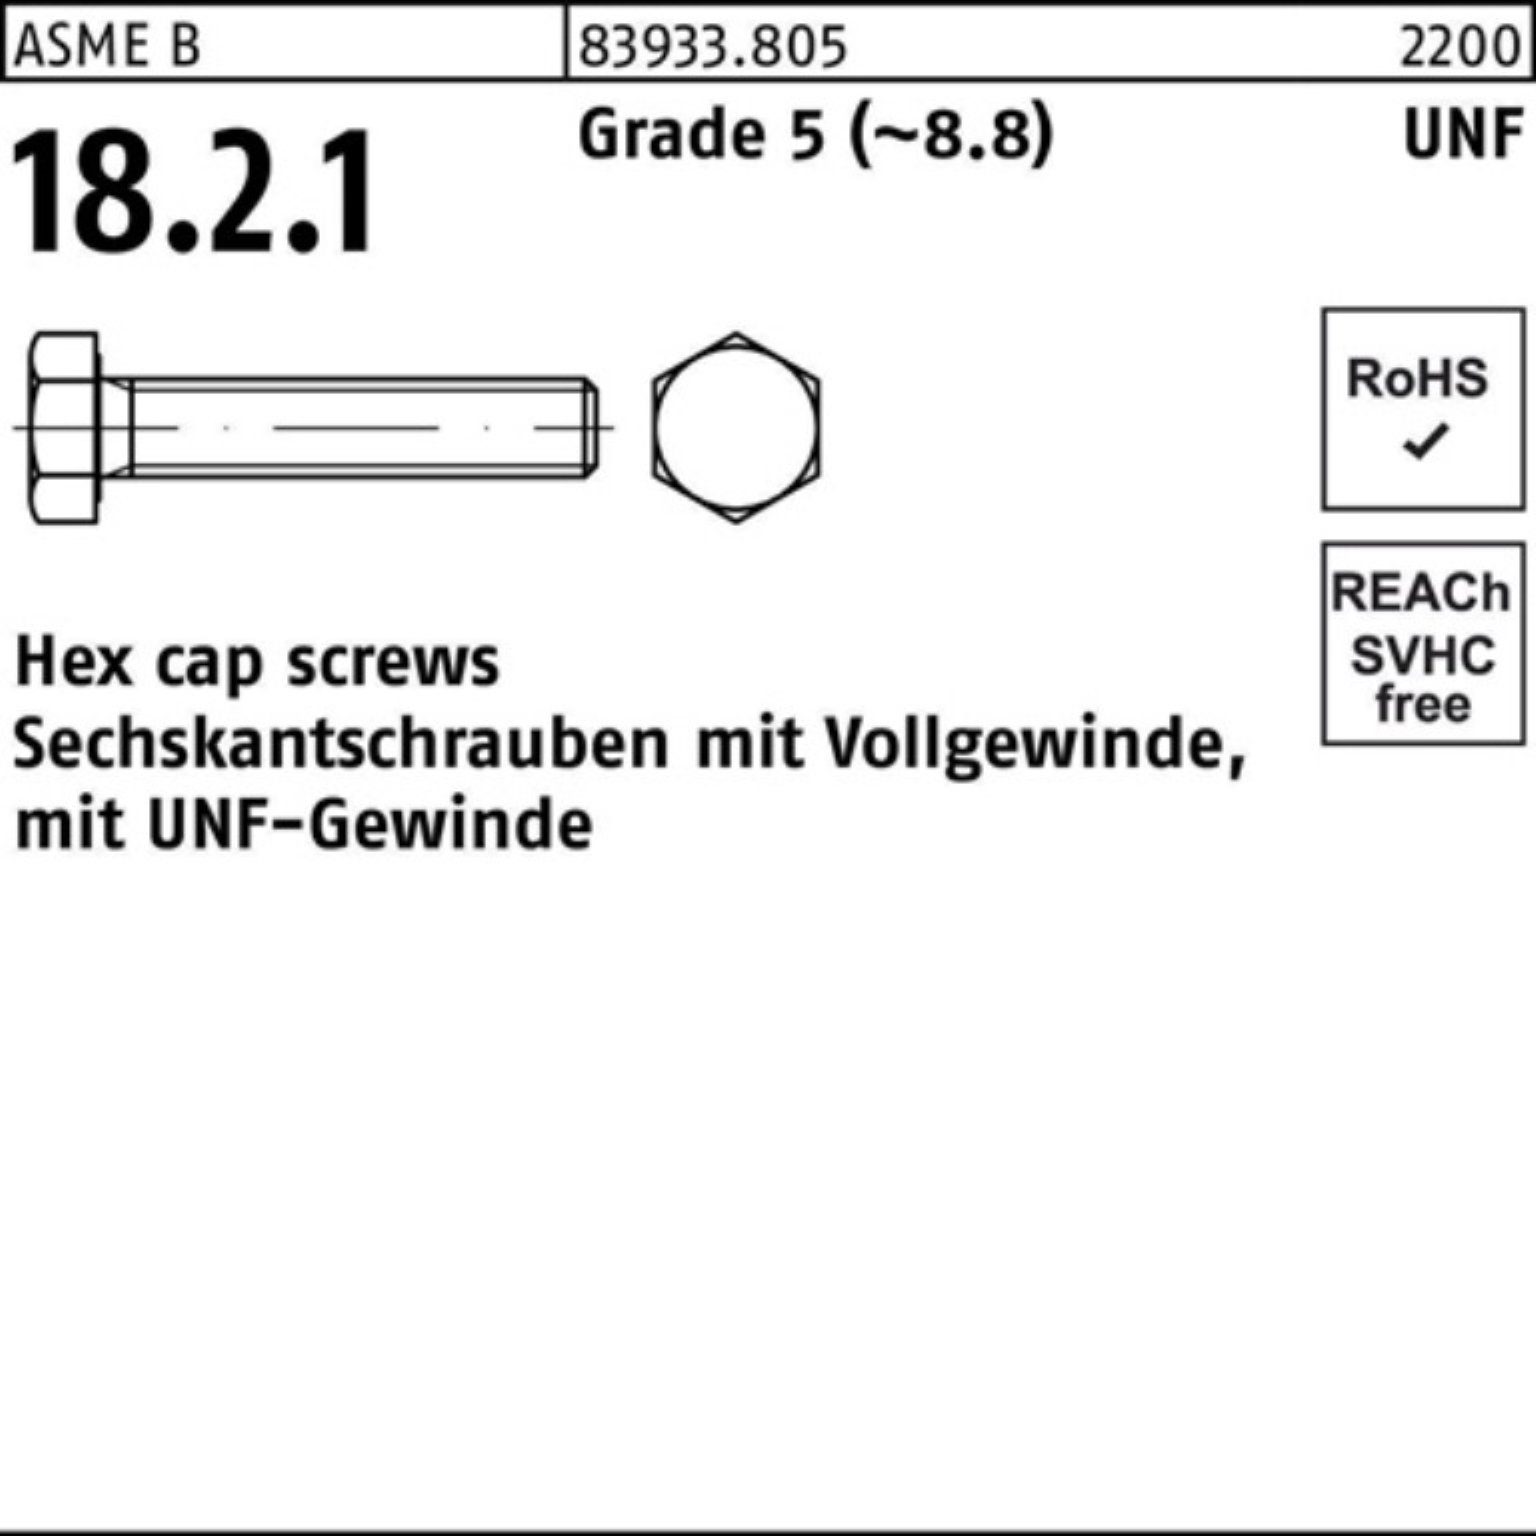 Reyher Sechskantschraube 100er Pack Sechskantschraube R 83933 UNF-Gewinde VG 3/4x 1 Grade 5 (8